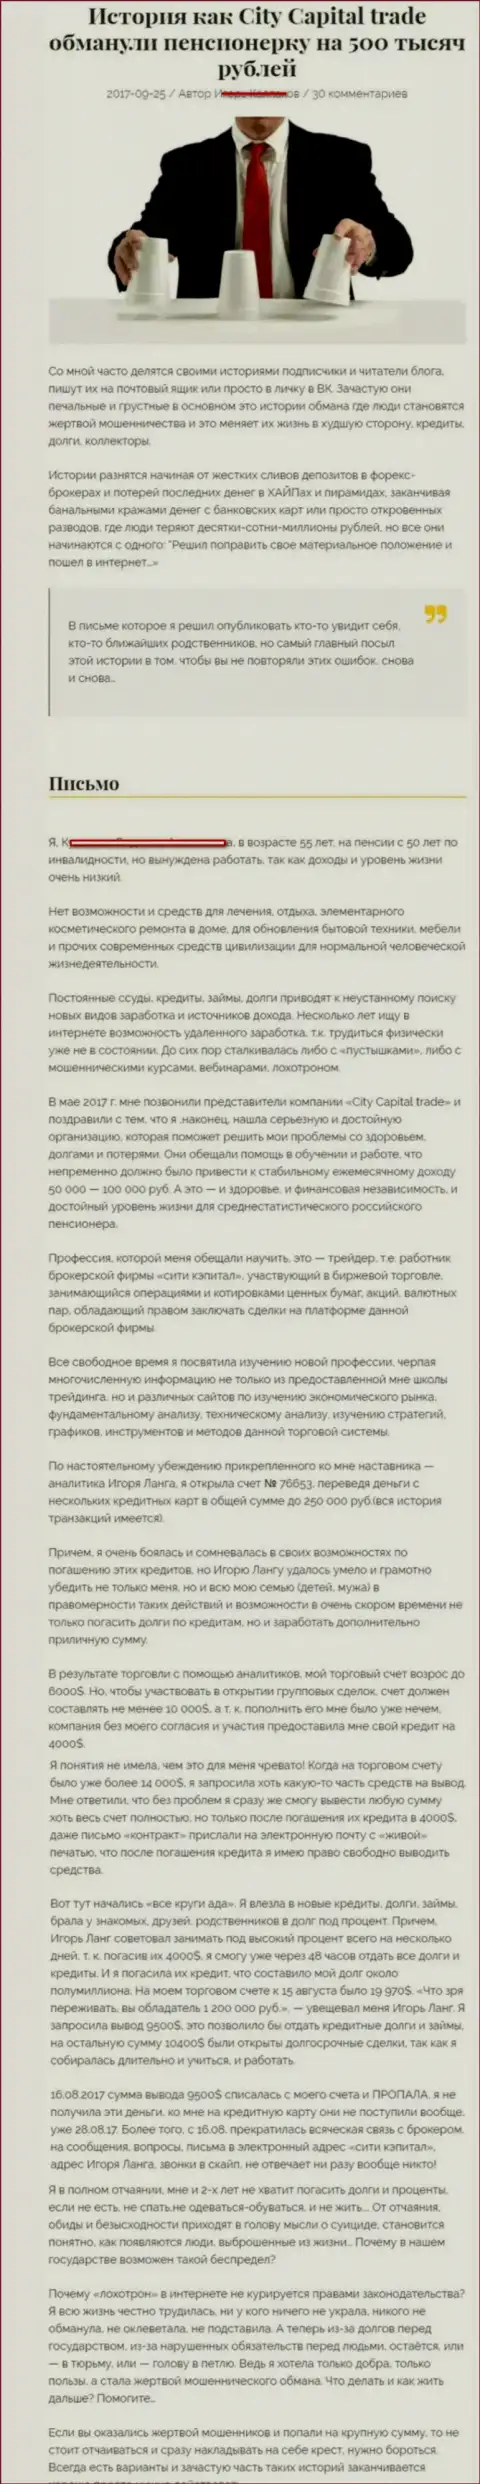 СитиКапитал Трейд обули клиентку пенсионного возраста - инвалида на 500 тысяч рублей - ВОРЫ !!!